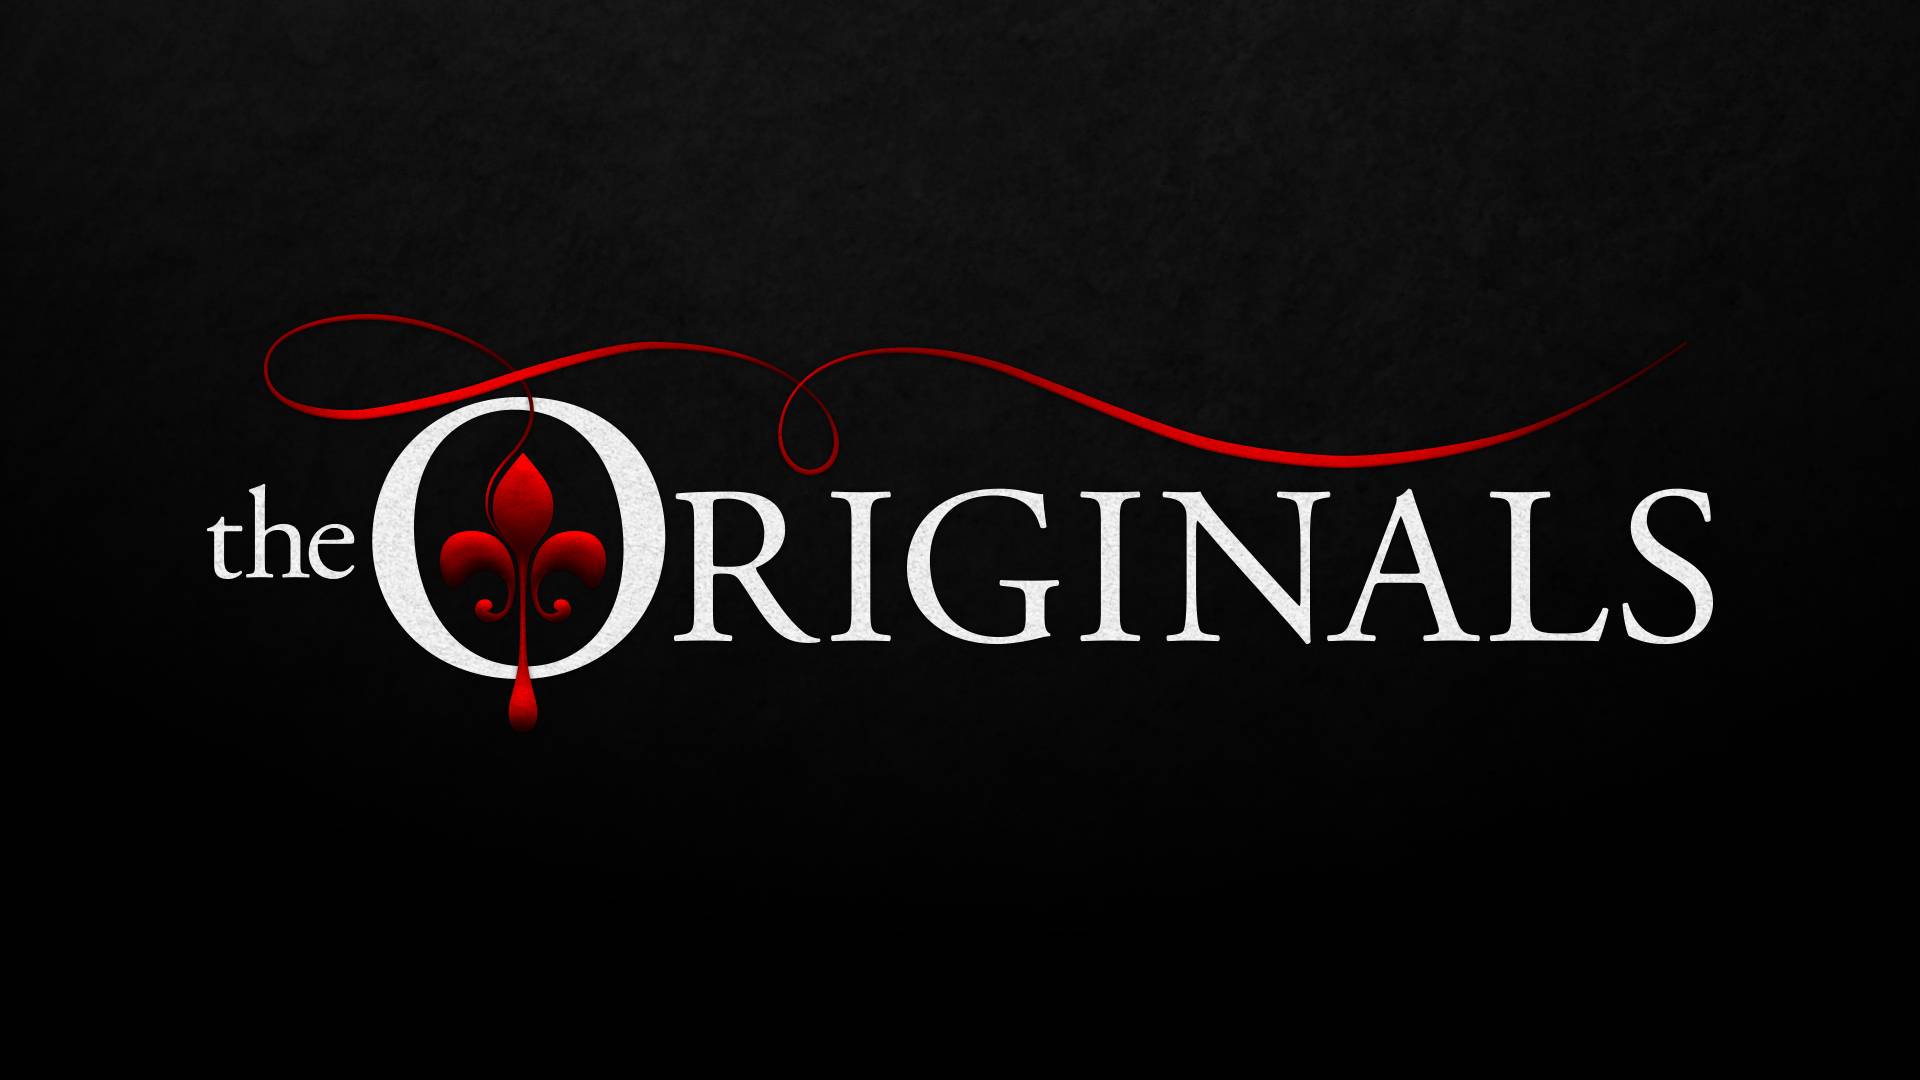 The Vampire Diares Logo - Episode Title Analysis. The Vampire Diaries